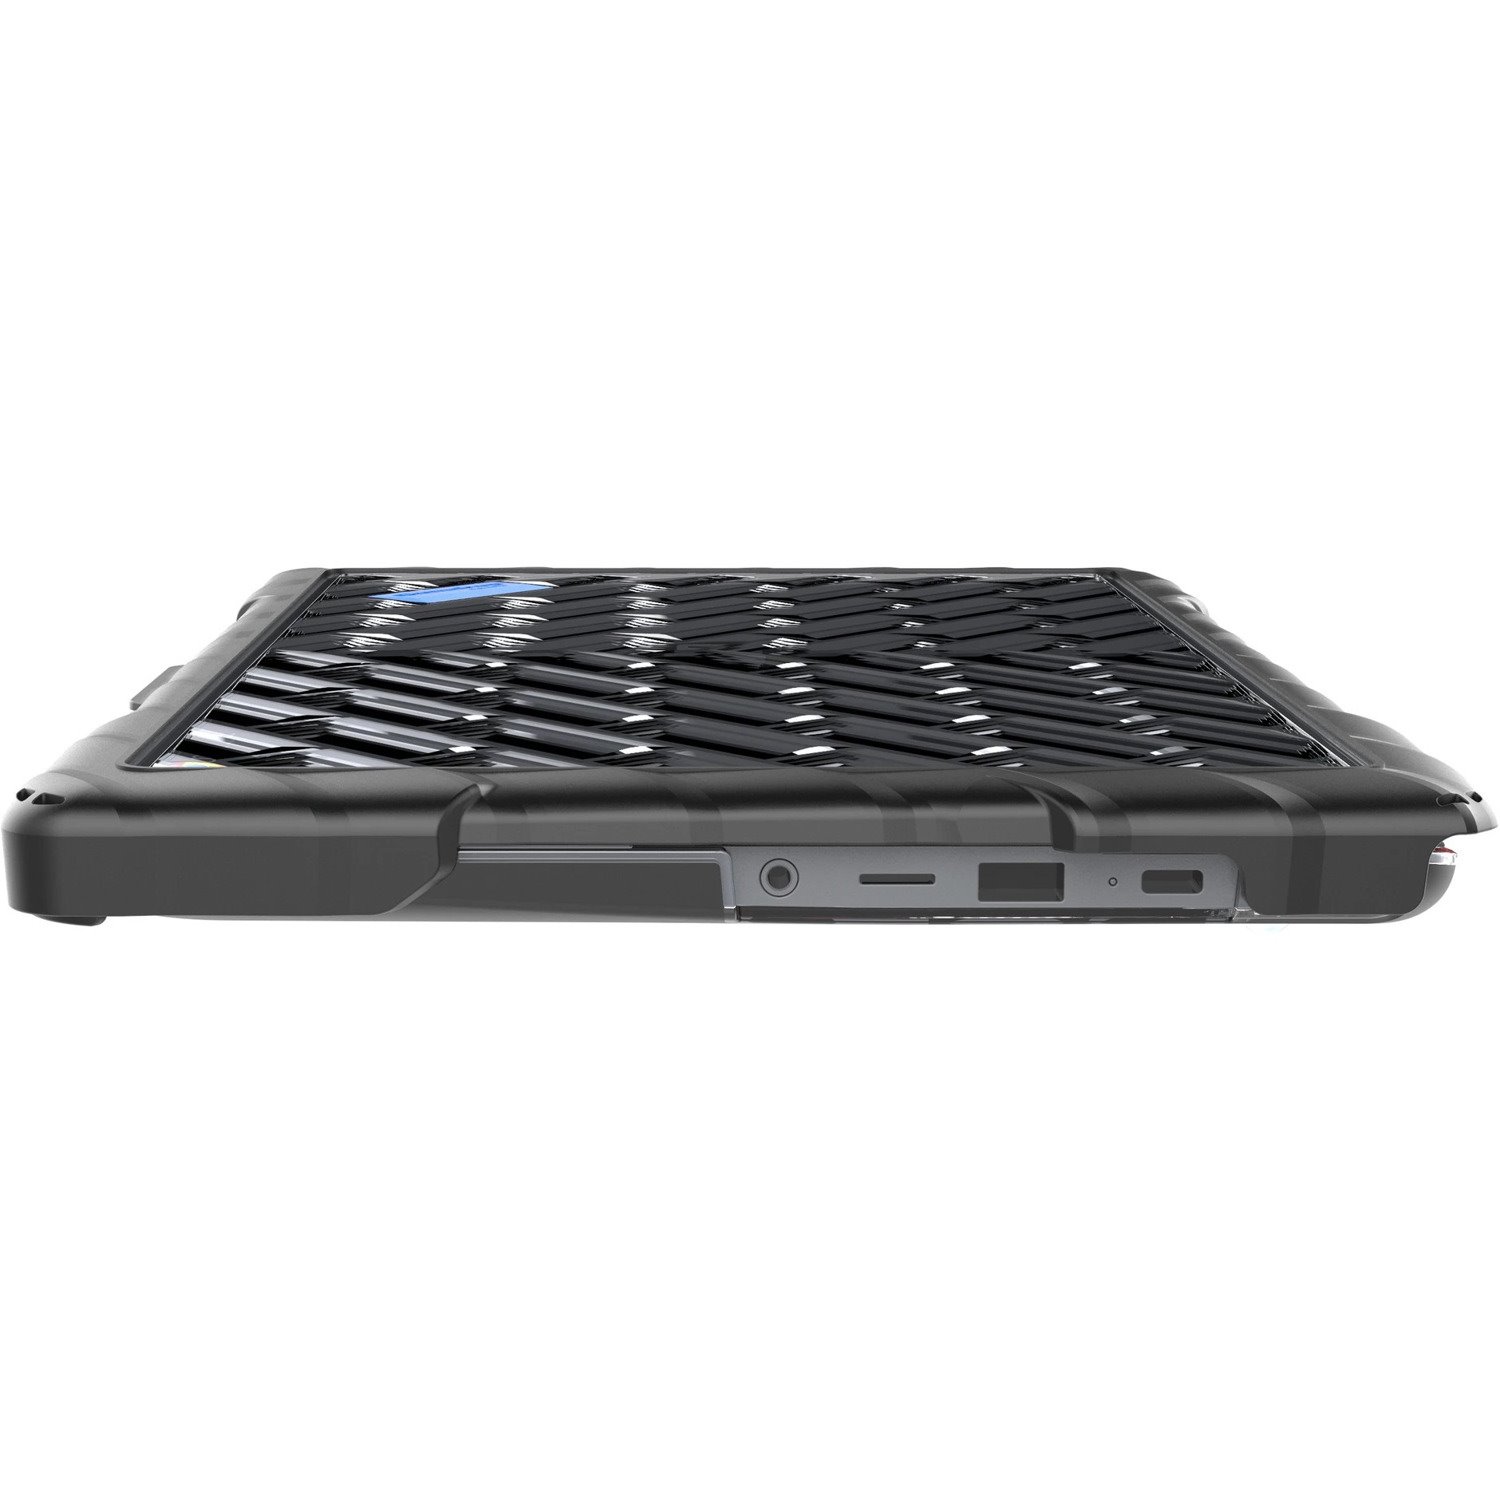 Gumdrop DropTech for HP Chromebook G5 14-inch